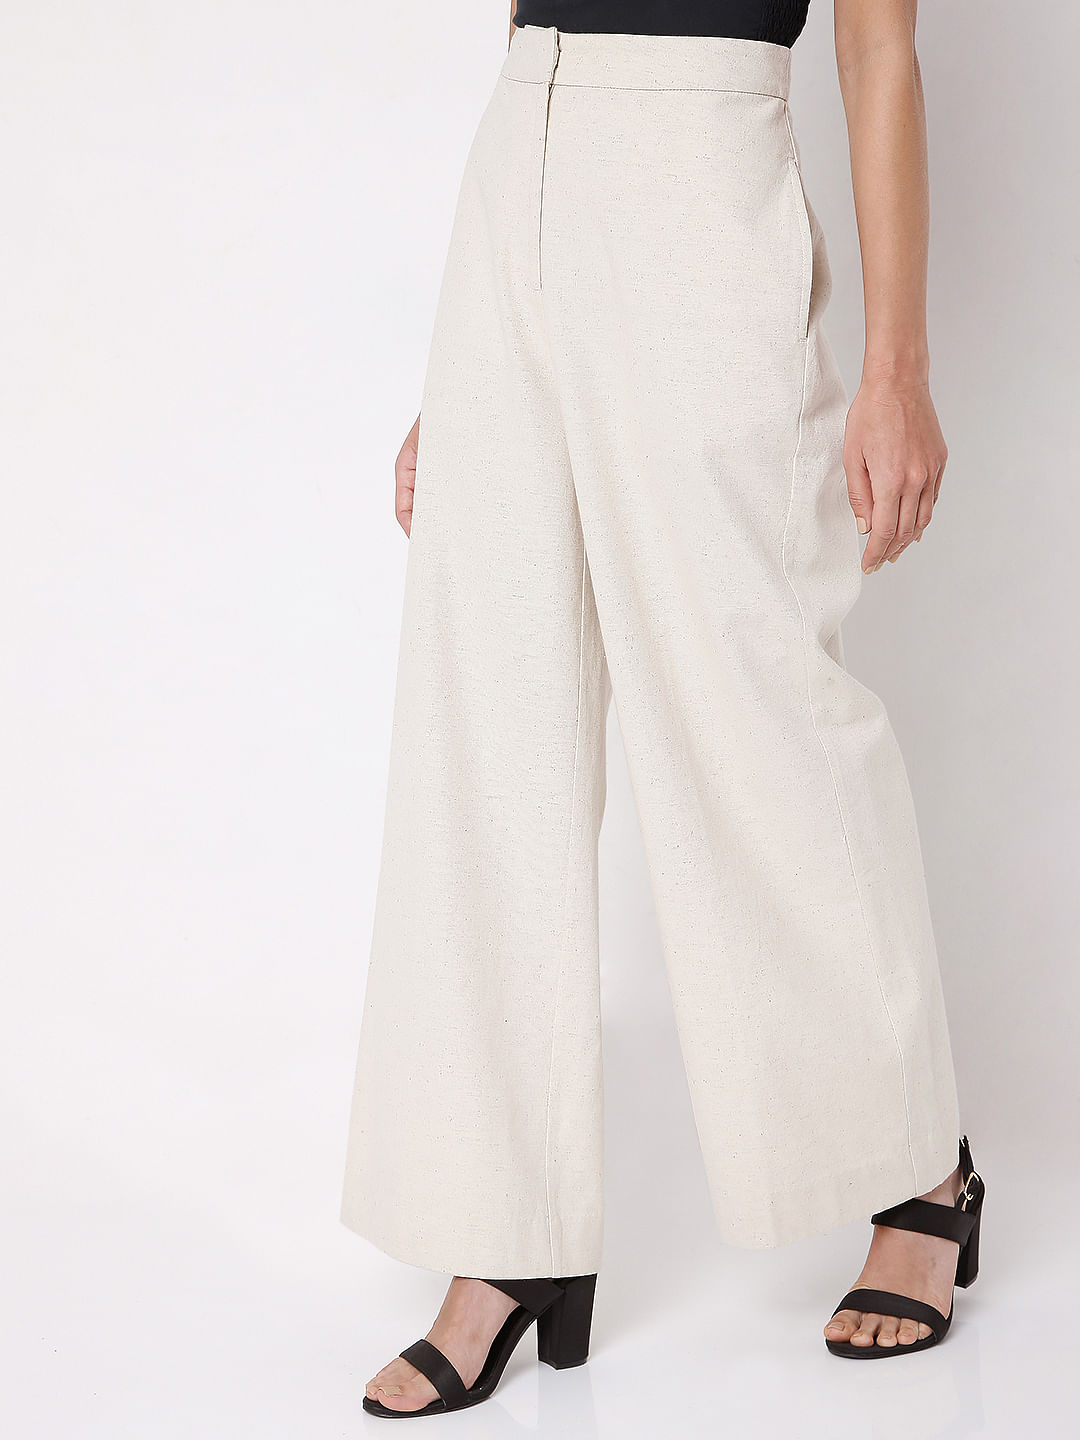 Buy Vero Moda Women White Parallel Trousers  Trousers for Women 1766301   Myntra